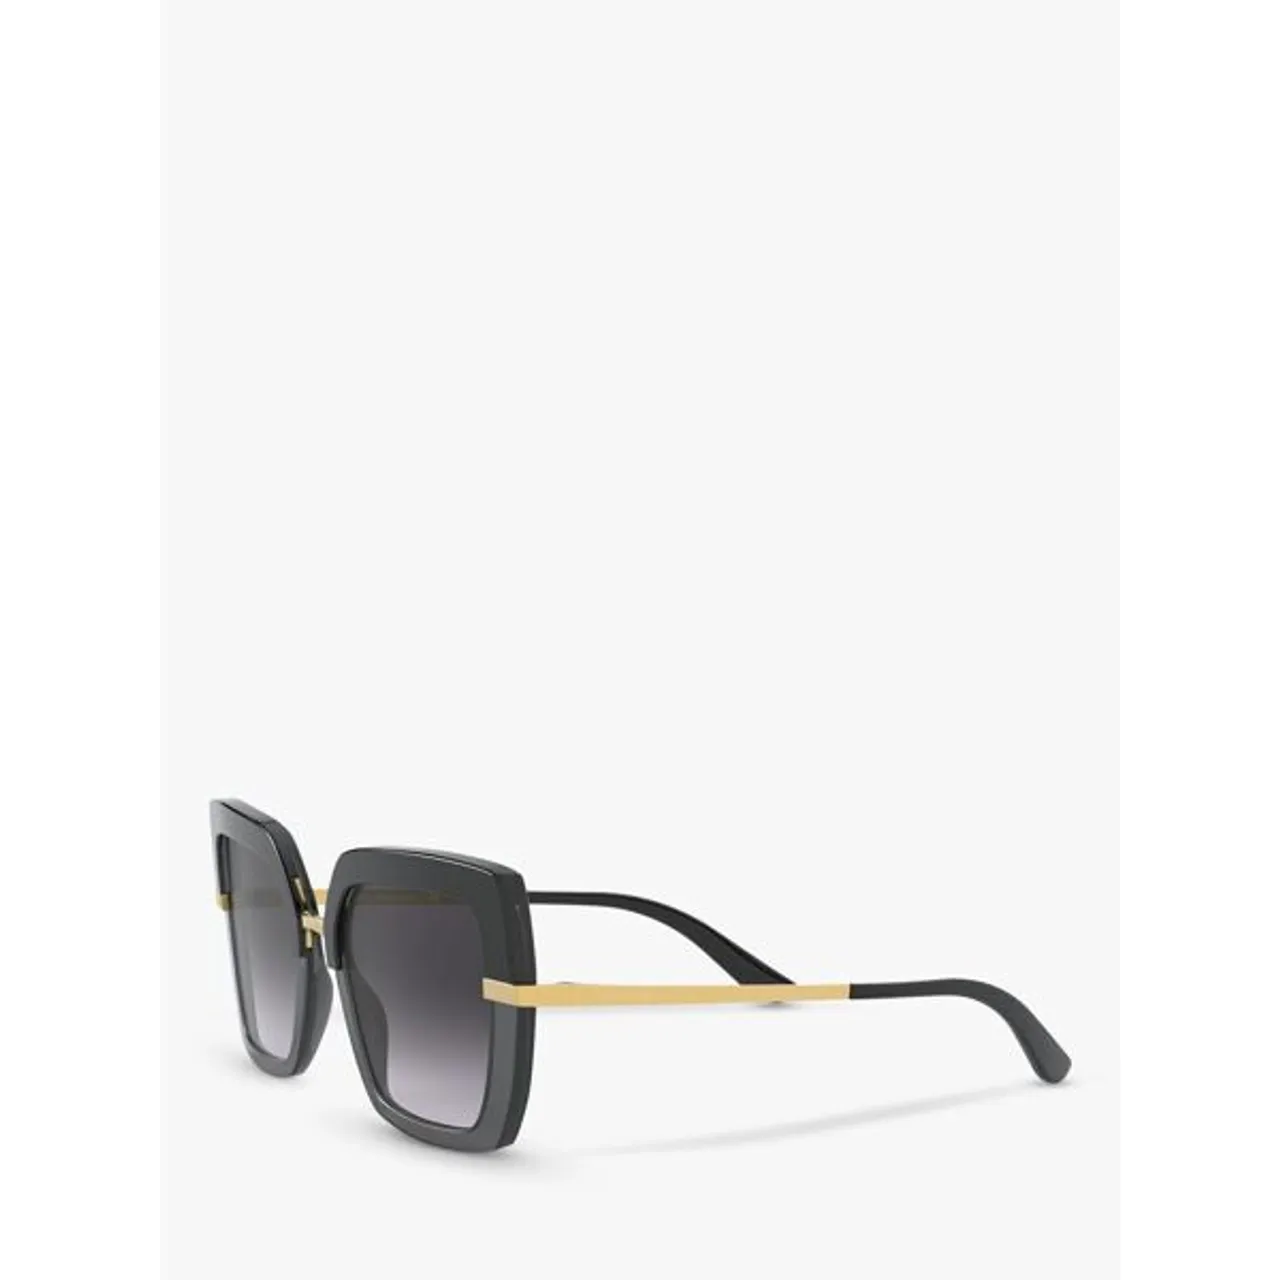 Dolce & Gabbana DG4373 Women's Square Sunglasses - Black/Grey Gradient - Female